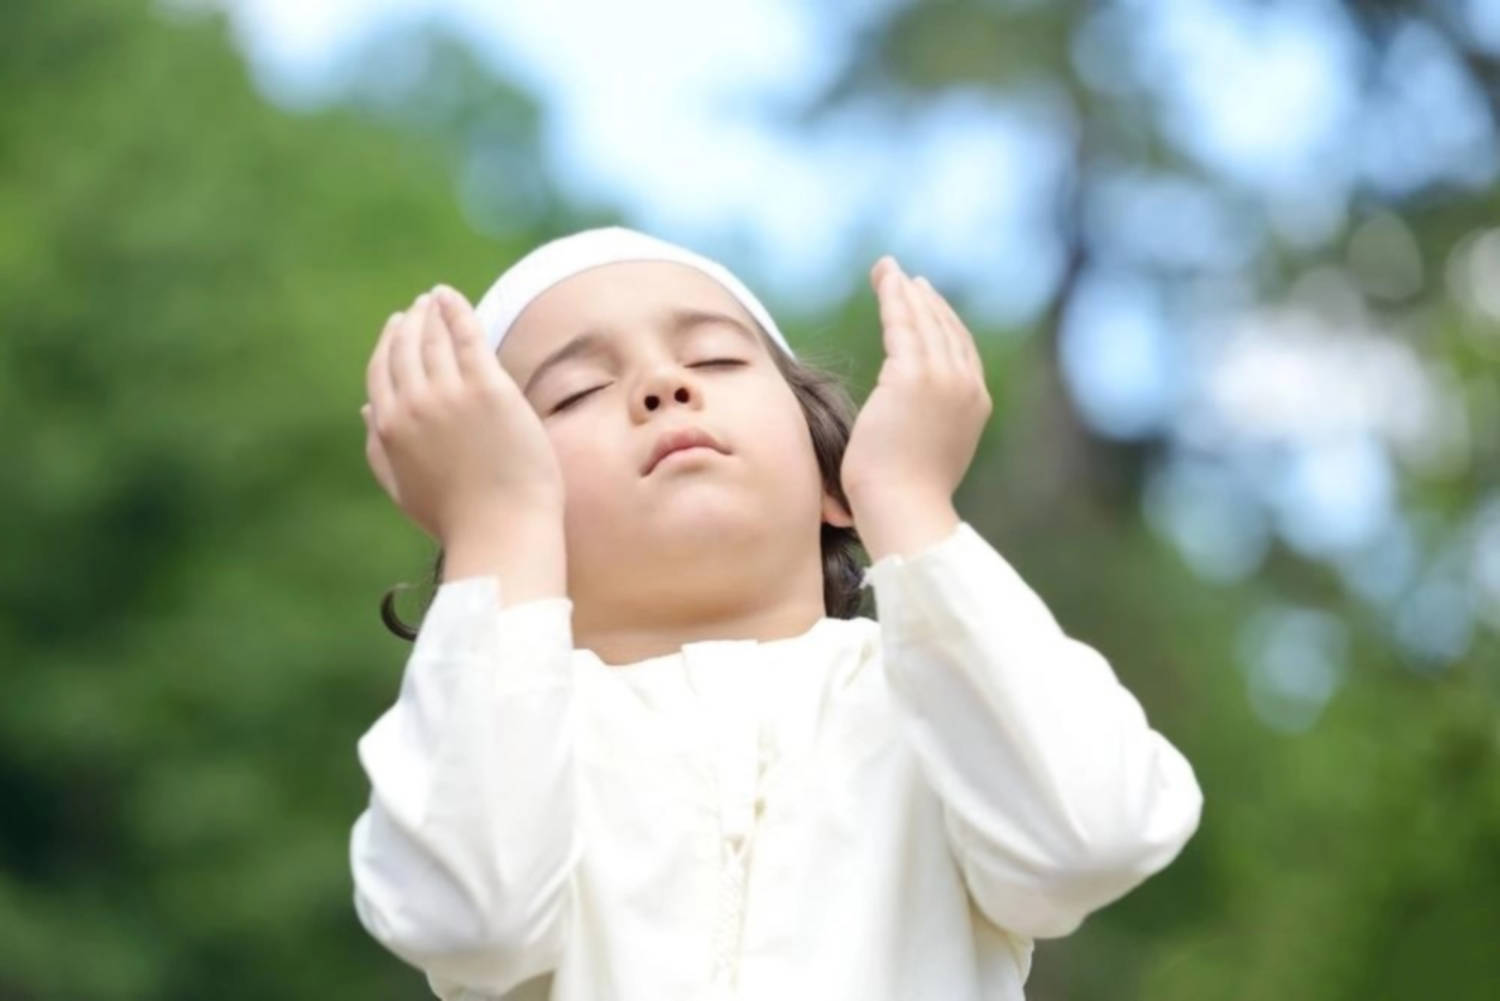 Adorable Praying Islamic Boy Picture